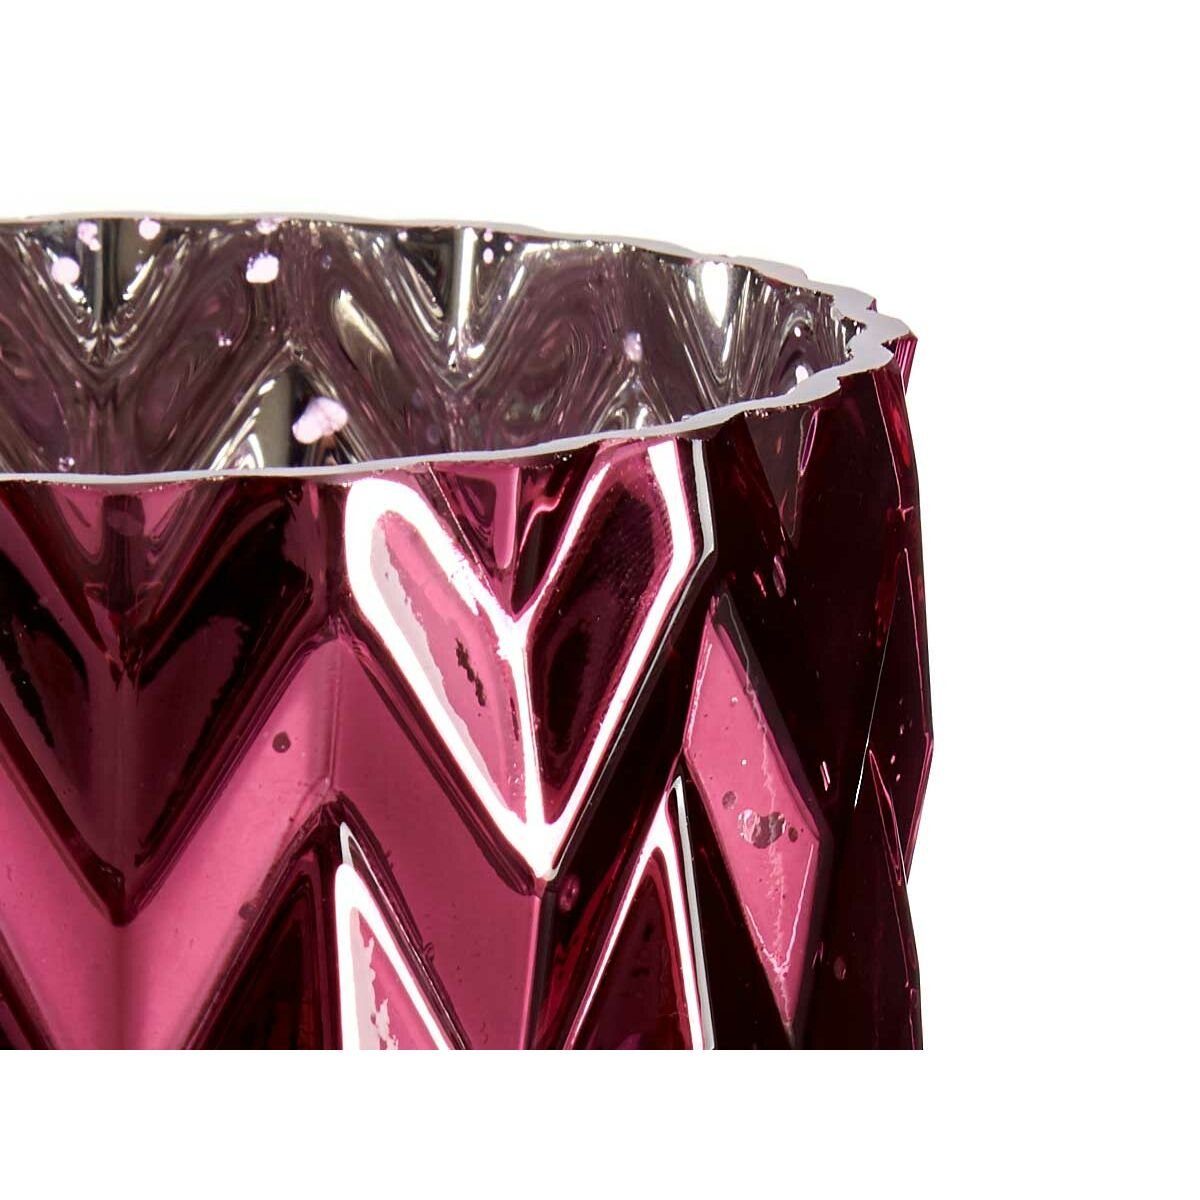 Gift Decor x Vase Stachel x 11,3 6 Schnitzerei cm 19,5 Stück Glas 11,3 Dekovase Rosa